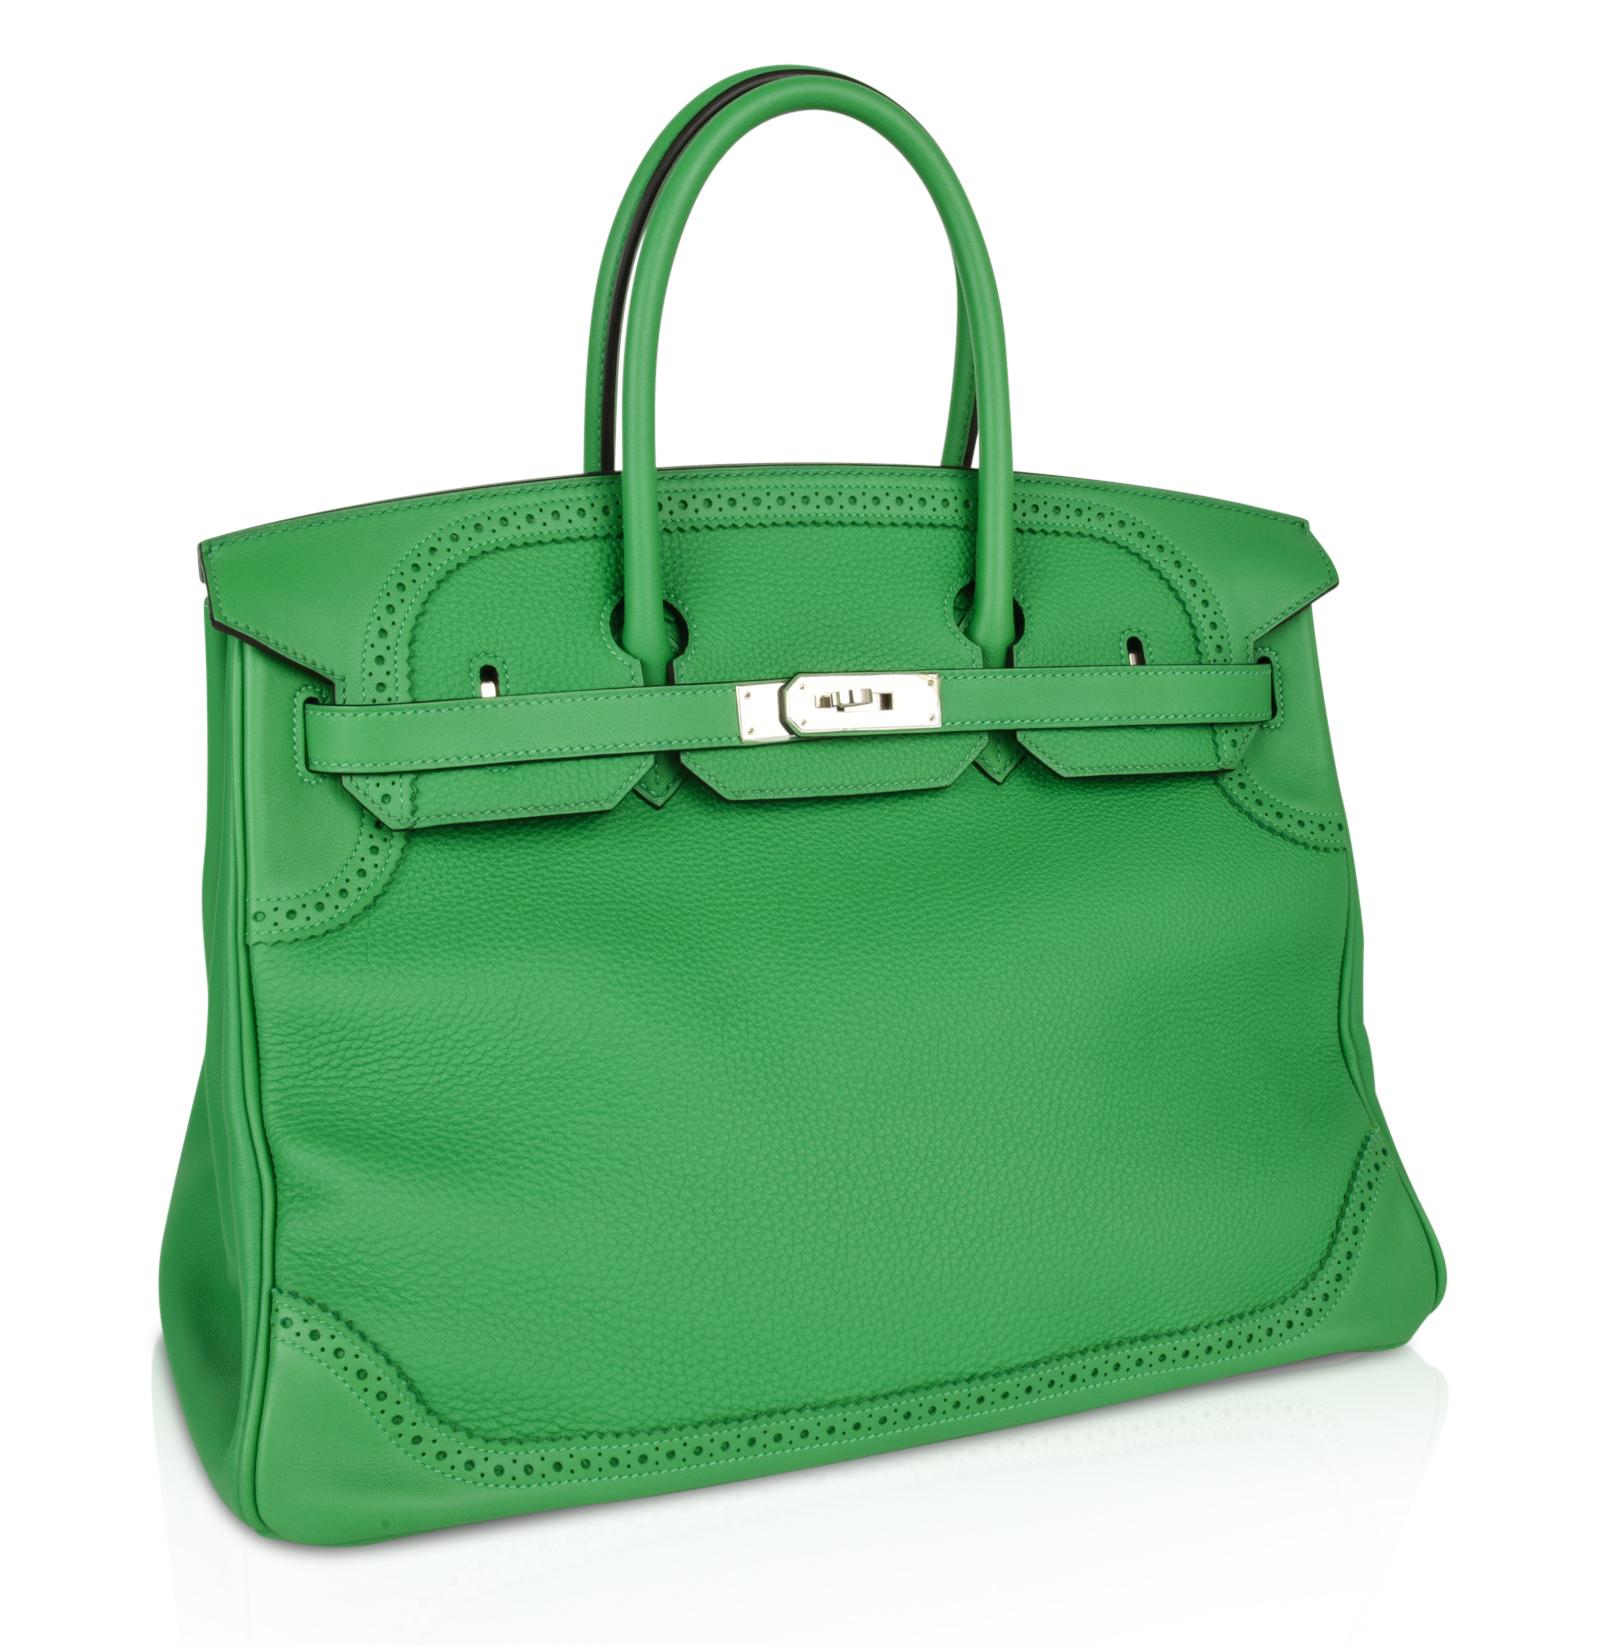 Green Hermes Birkin 35 Limited Edition Ghillies Bag Rare Bamboo Palladium Hardware